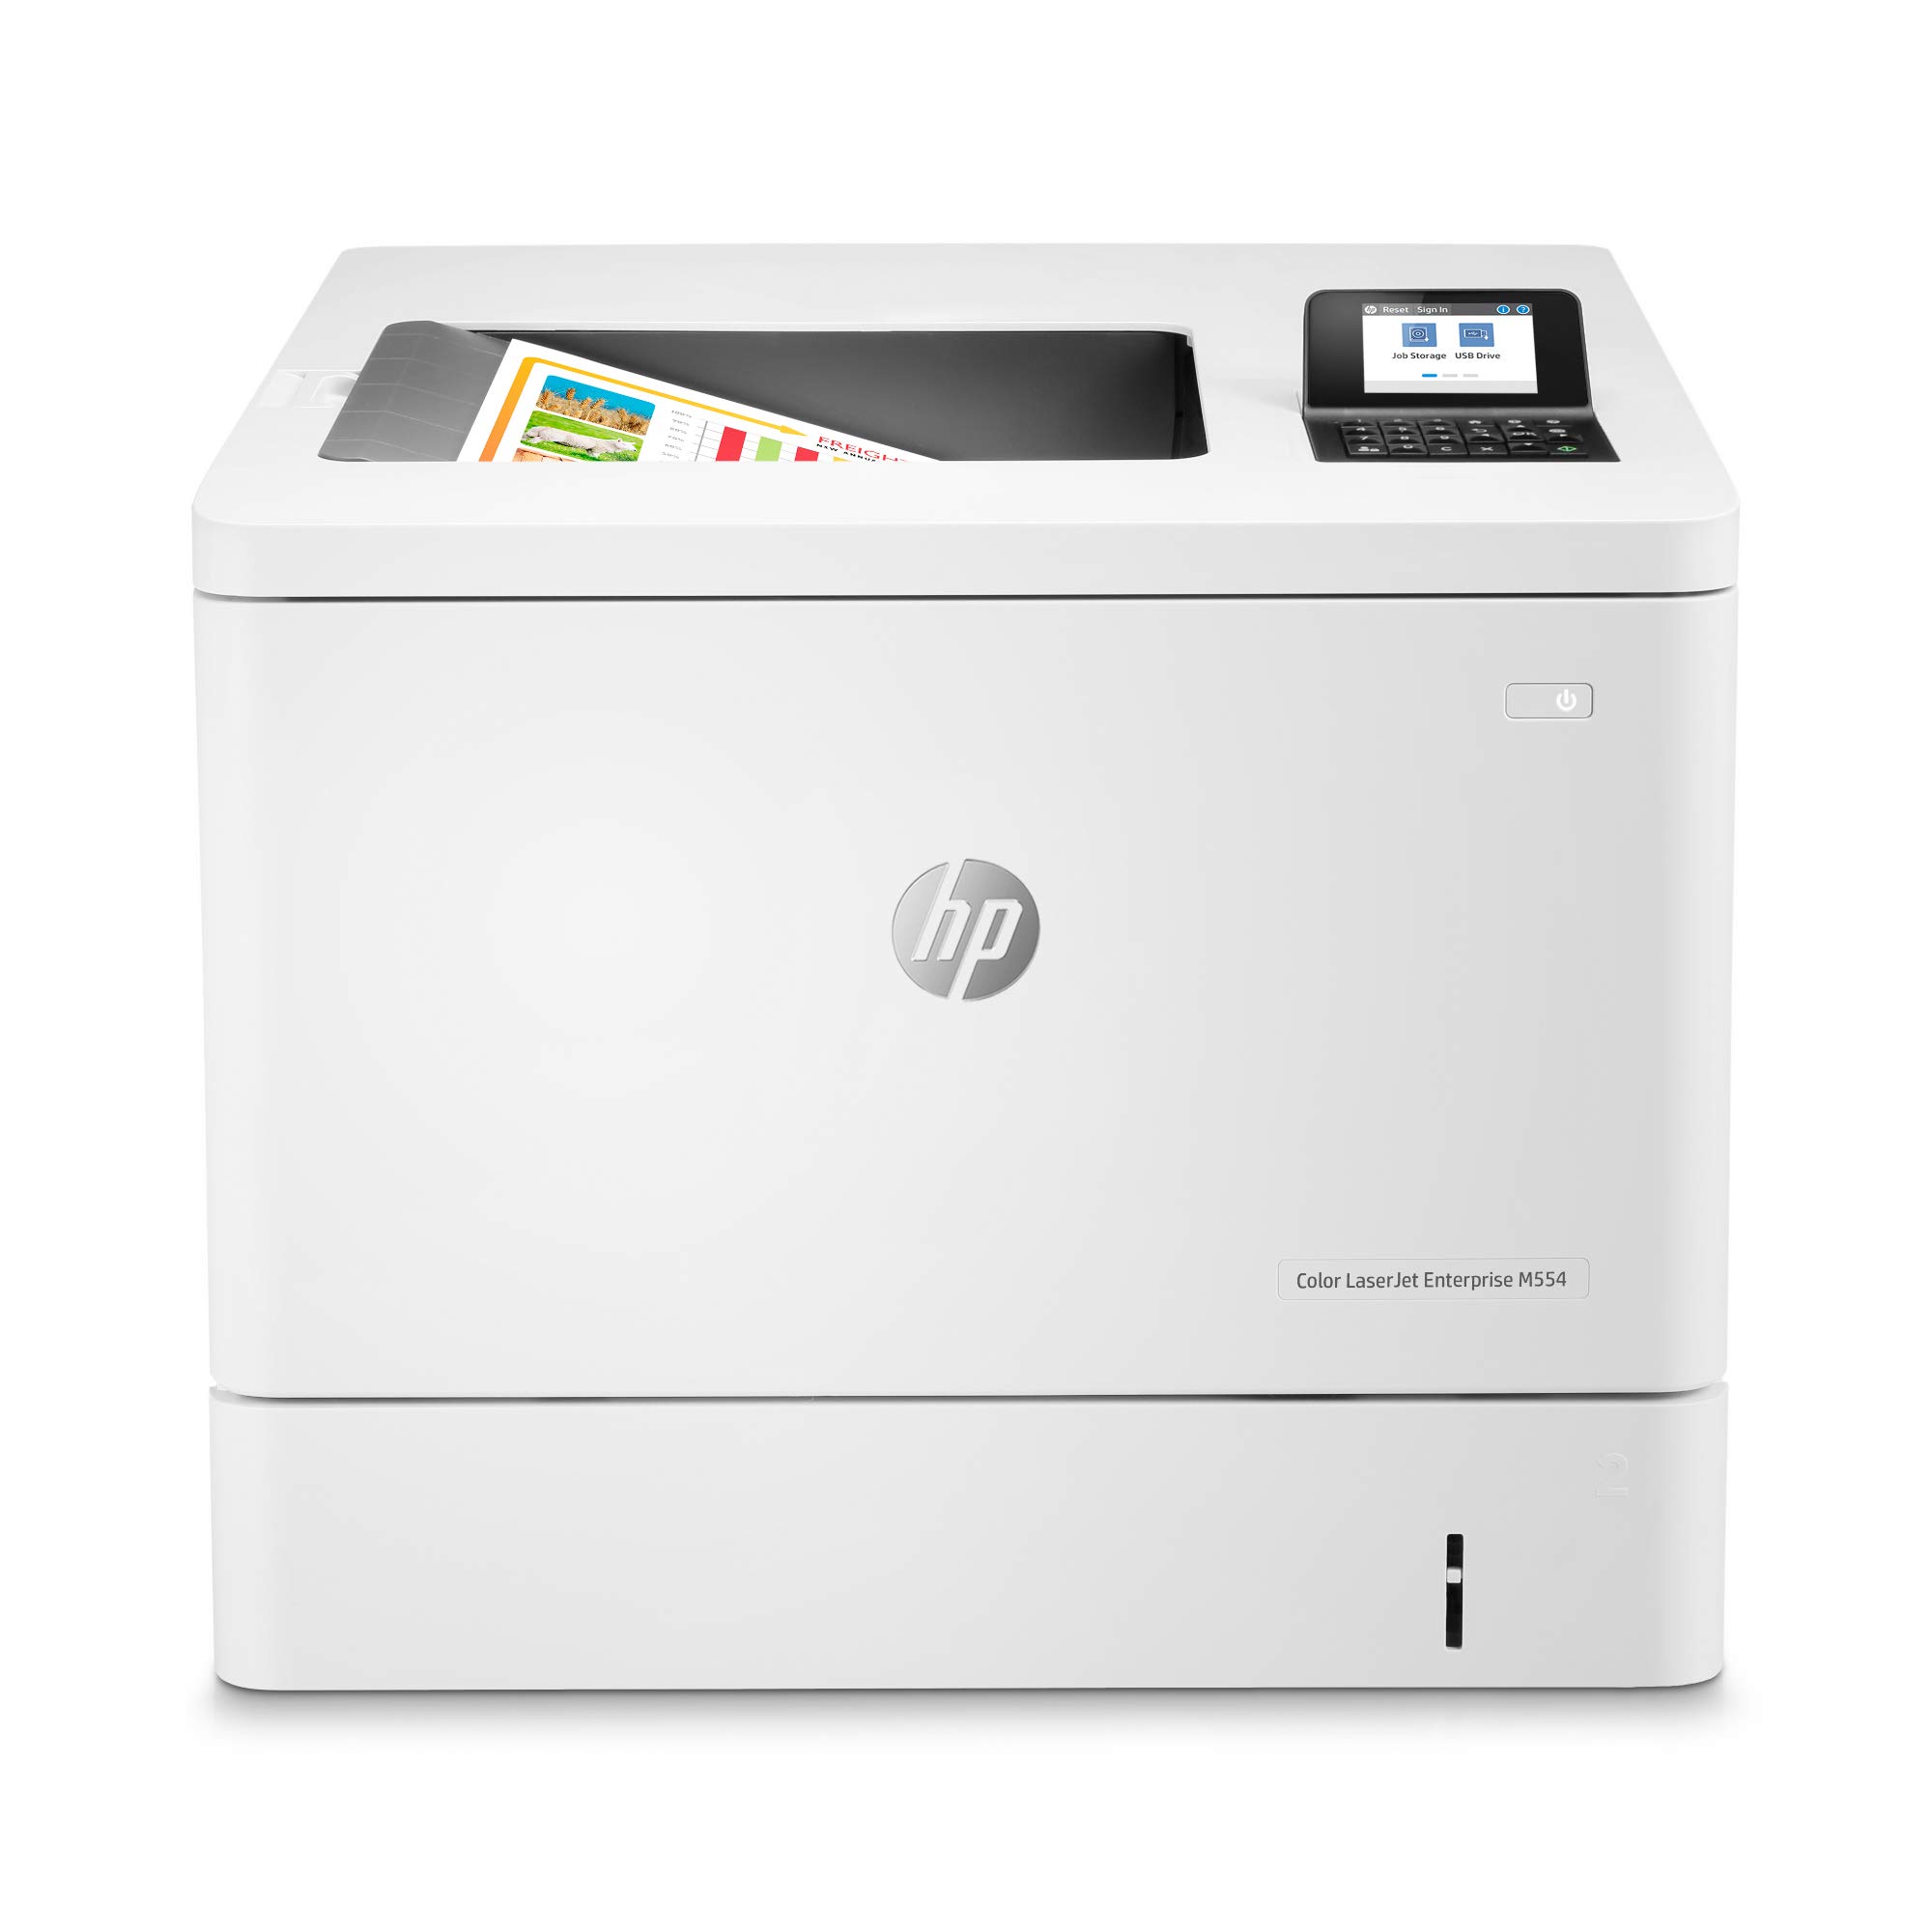 HP कलर लेजरजेट एंटरप्राइज M554dn डुप्लेक्स प्रिंटर (7ZU...